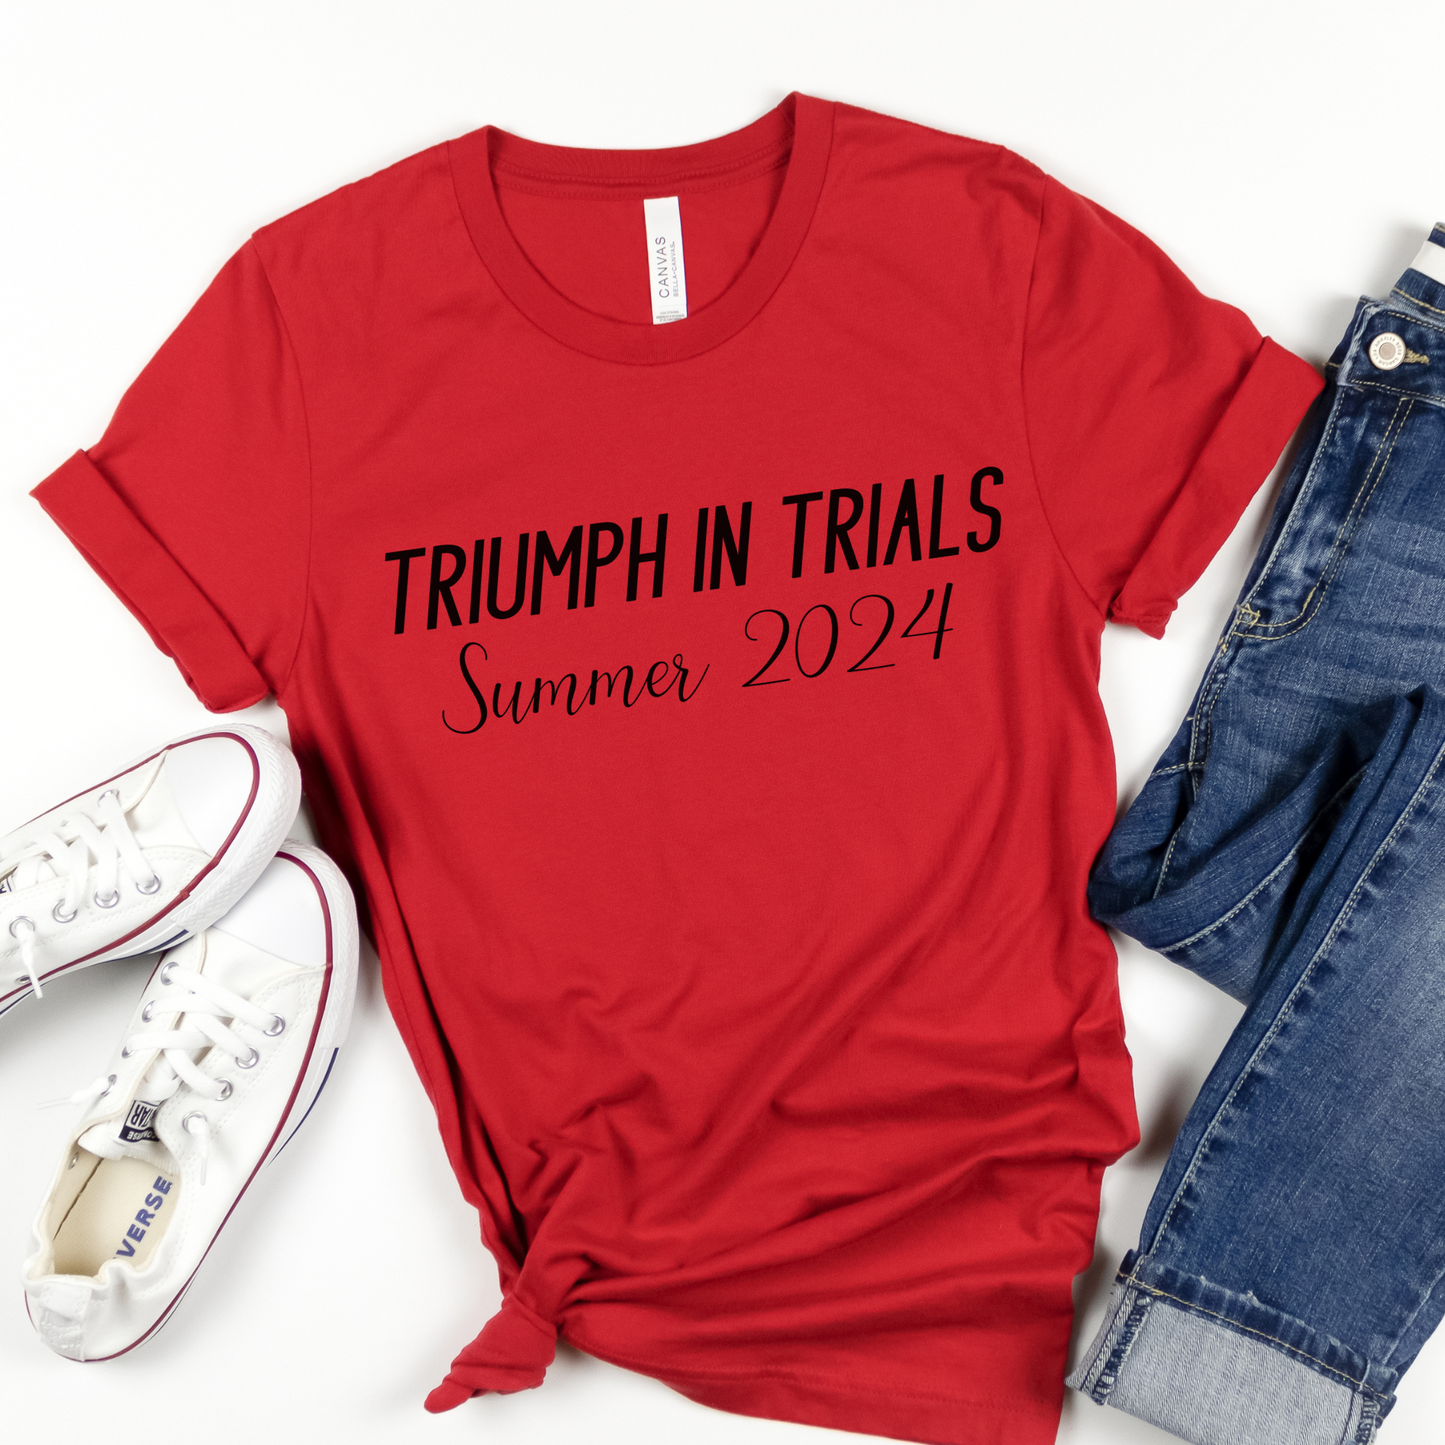 Red Cotton Tee reads, Triumph in Trials Summer 2024